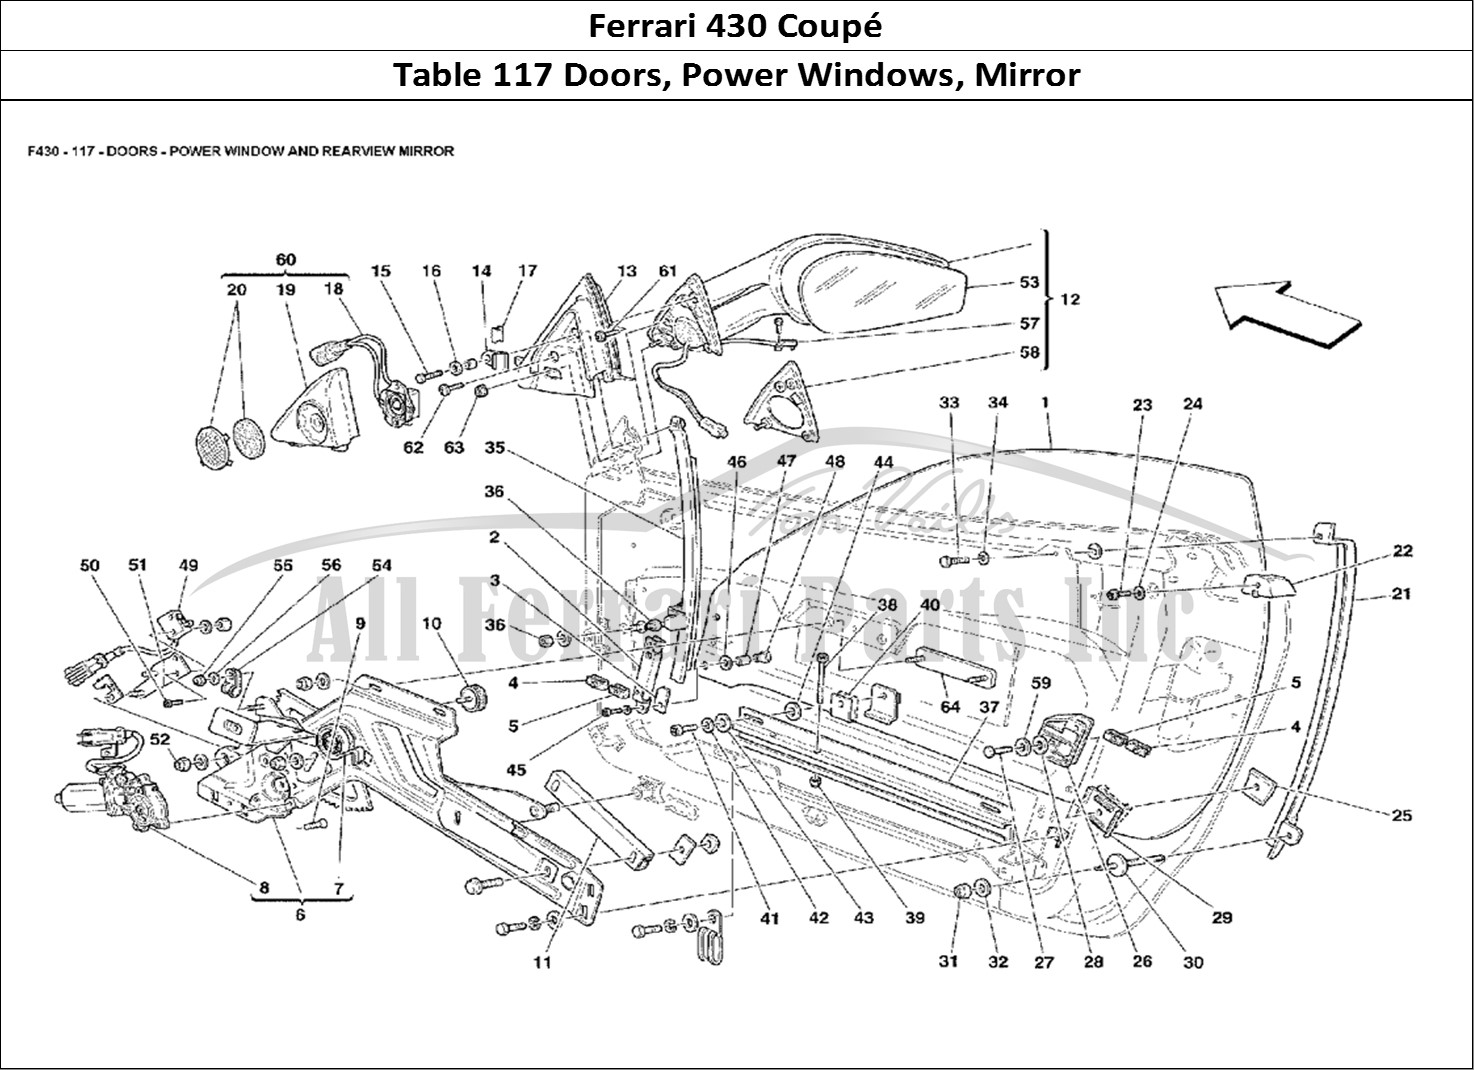 Ferrari Parts Ferrari 430 Coup Page 117 Doors - Power Window and